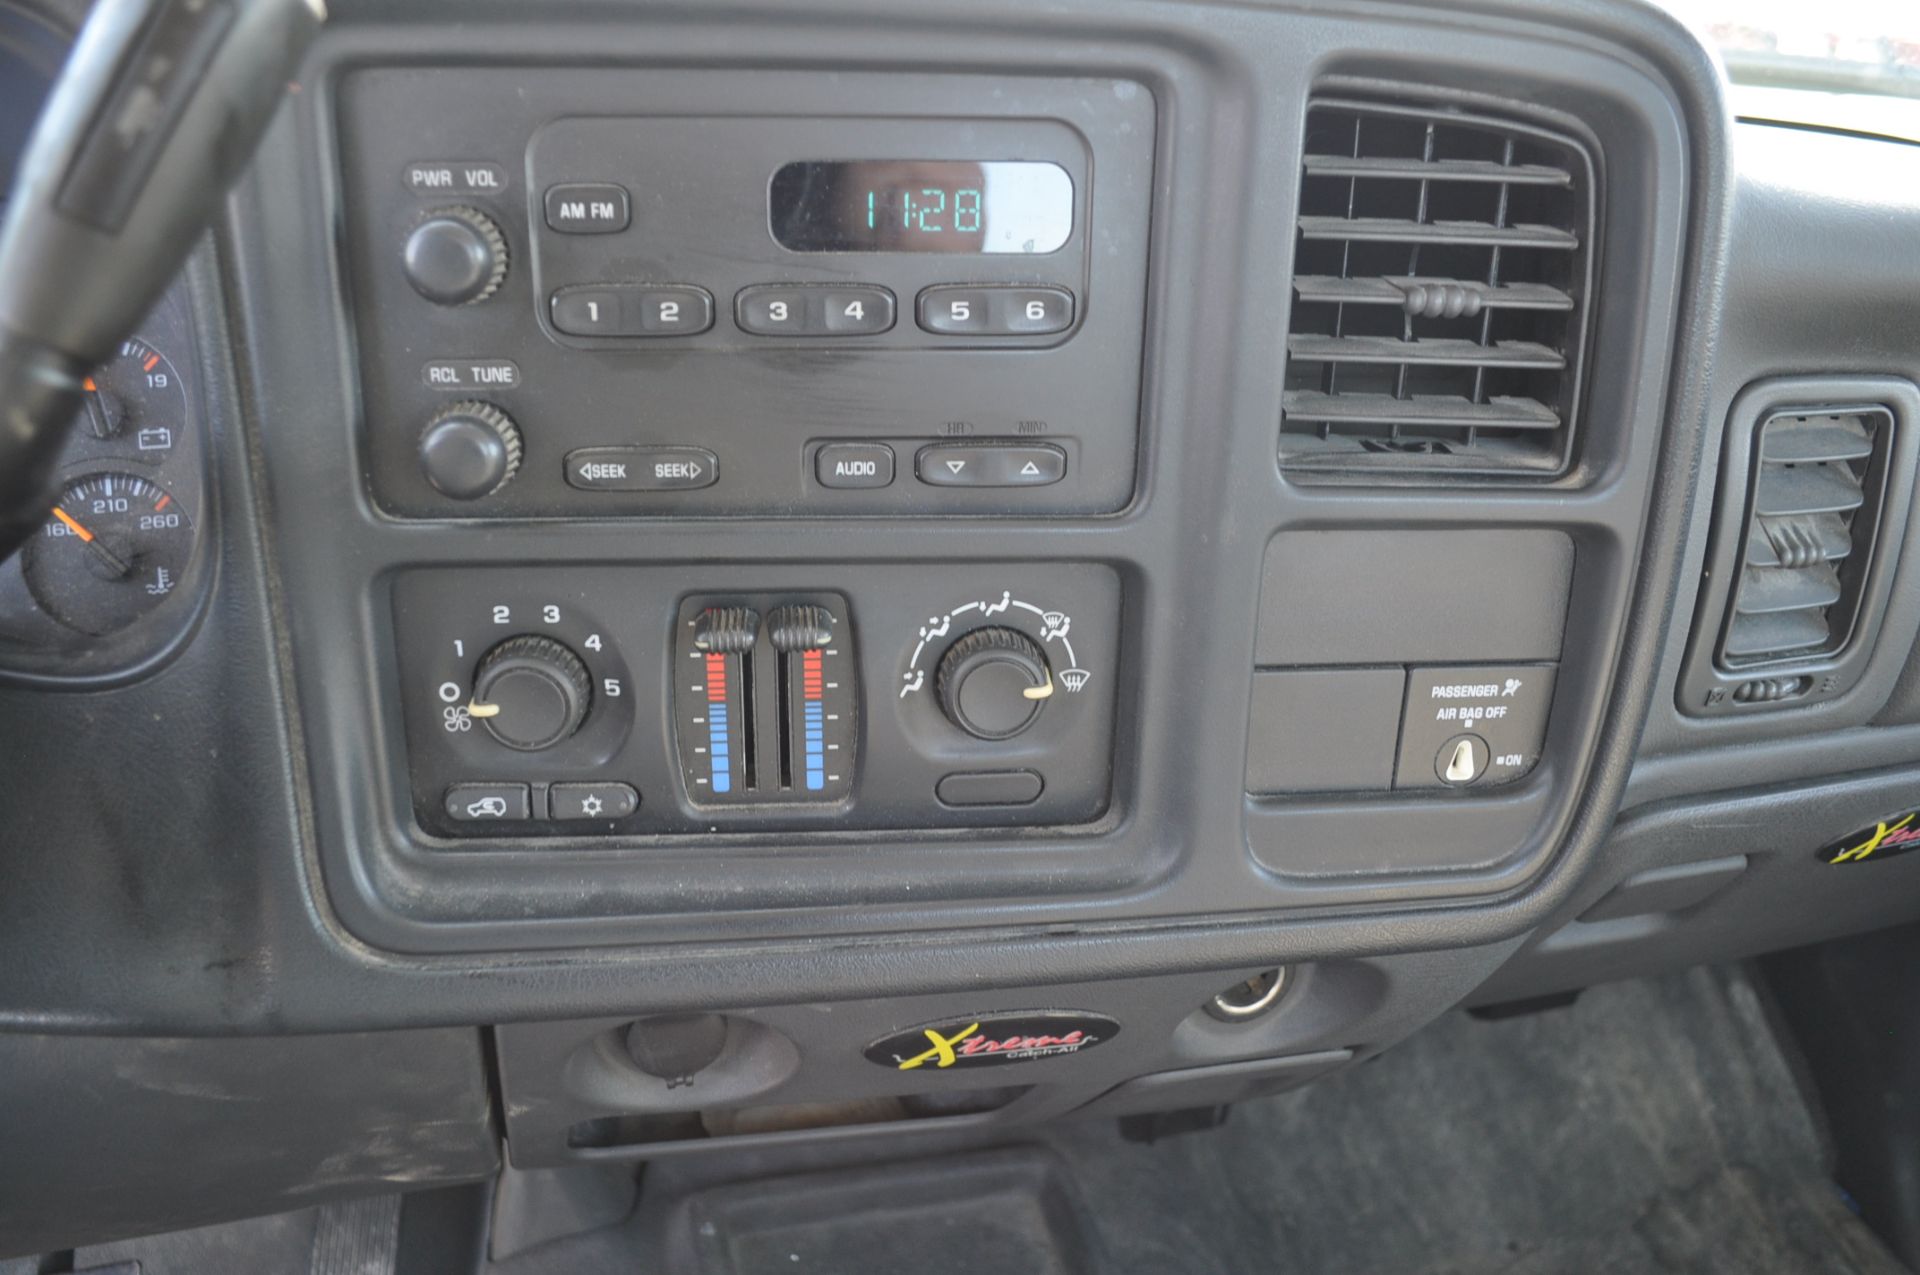 2007 Chevy 2500 HD, reg cab, 4x4, auto trans, 194,869 mi. - Image 7 of 17